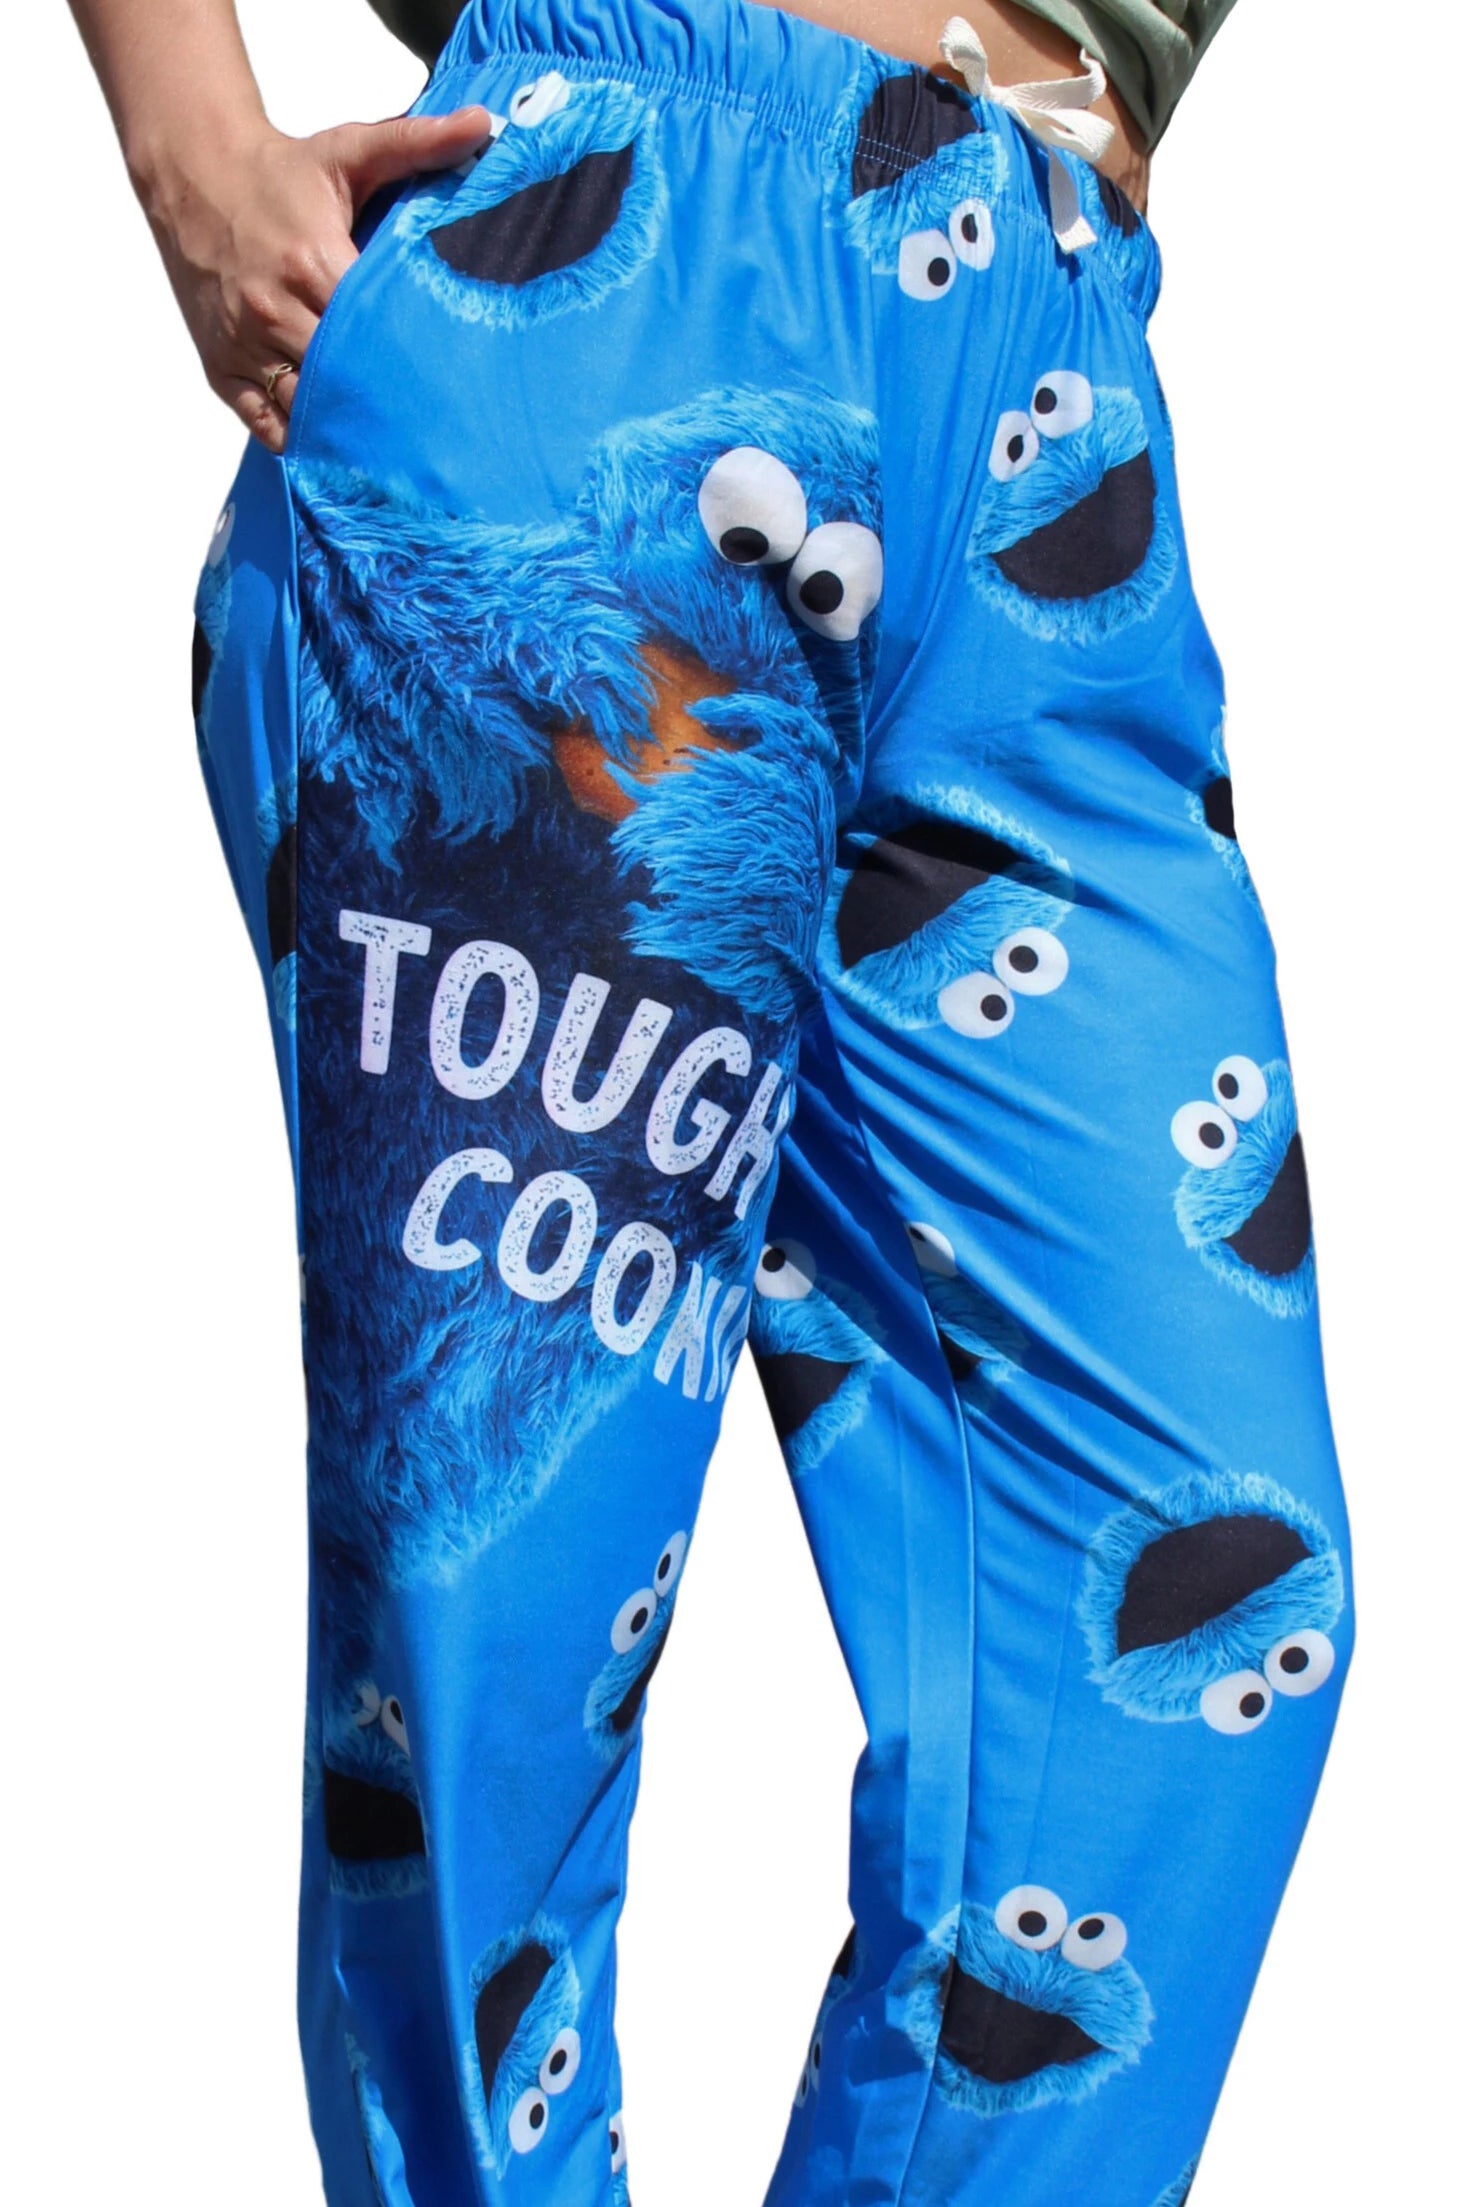 Tough Cookie pajama lounge pants